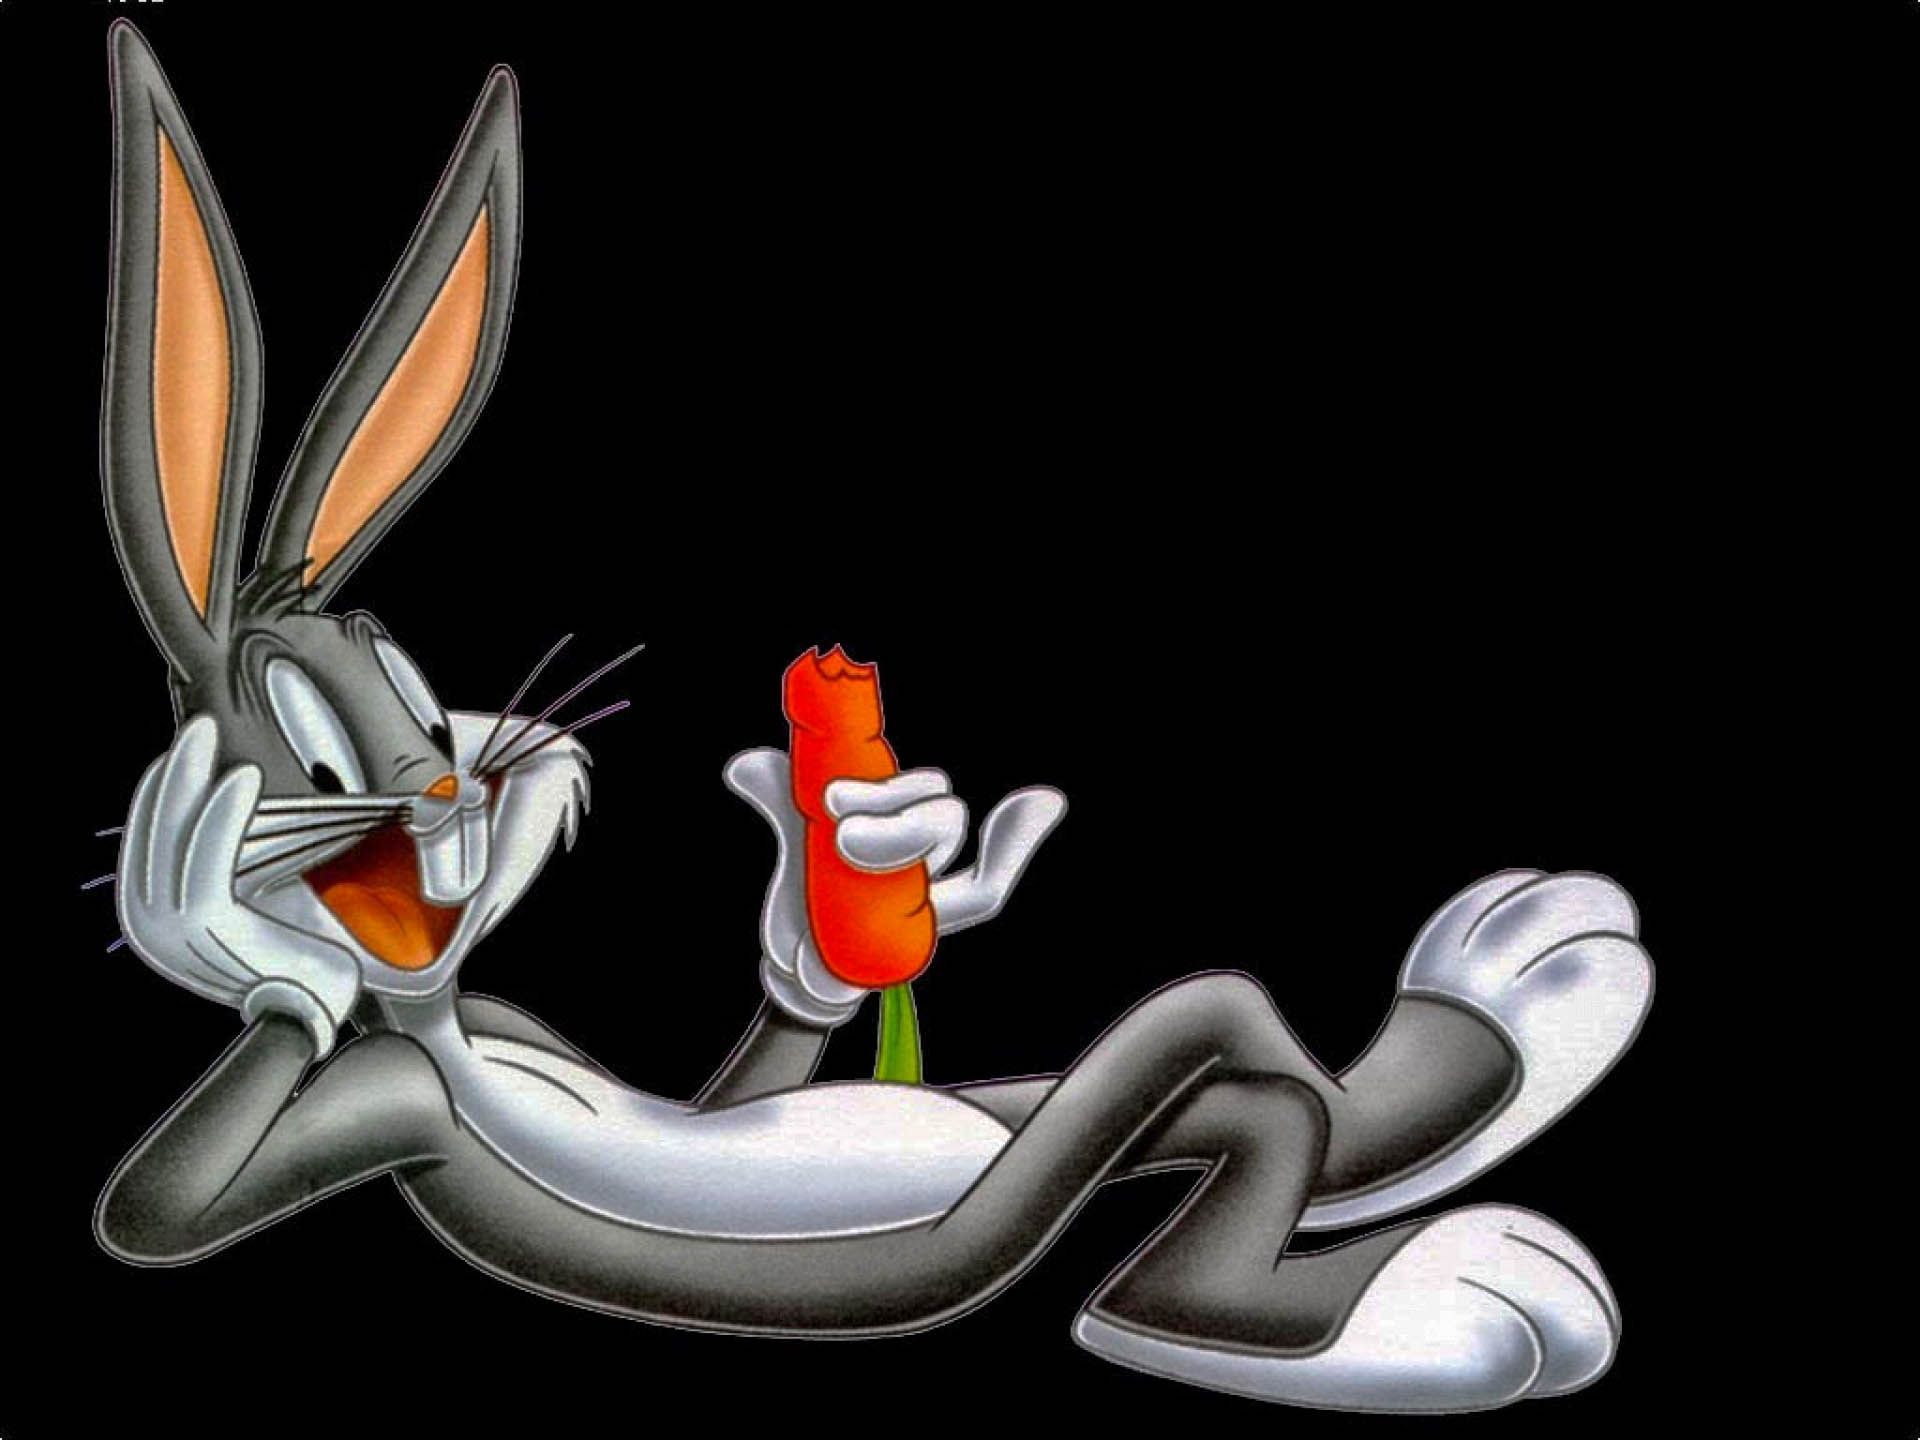 Bugs Bunny Screen Savers Wallpapers